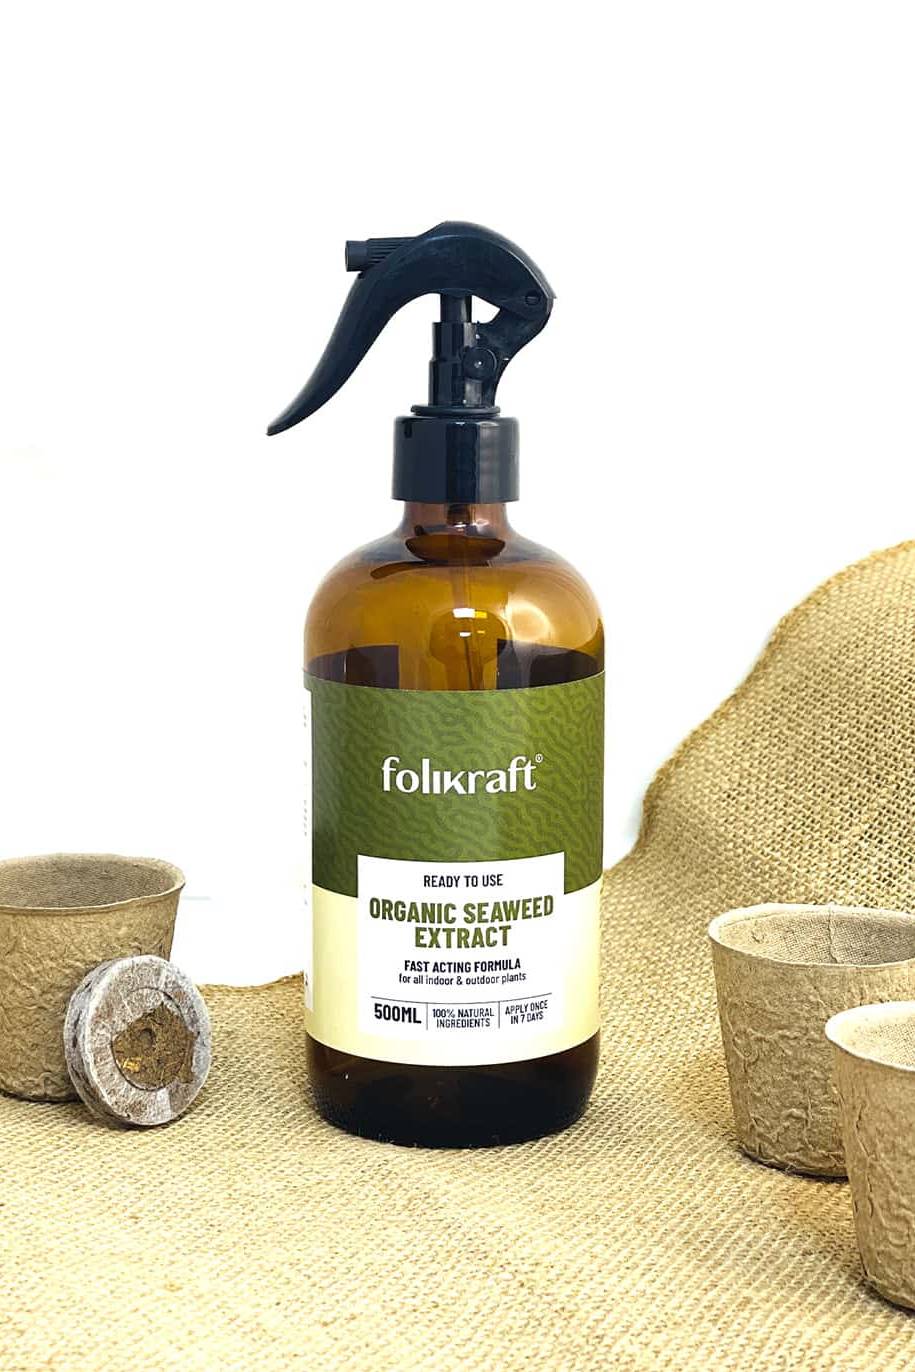 Folikraft Organic Seaweed Fertilizer 500ml - ready to use